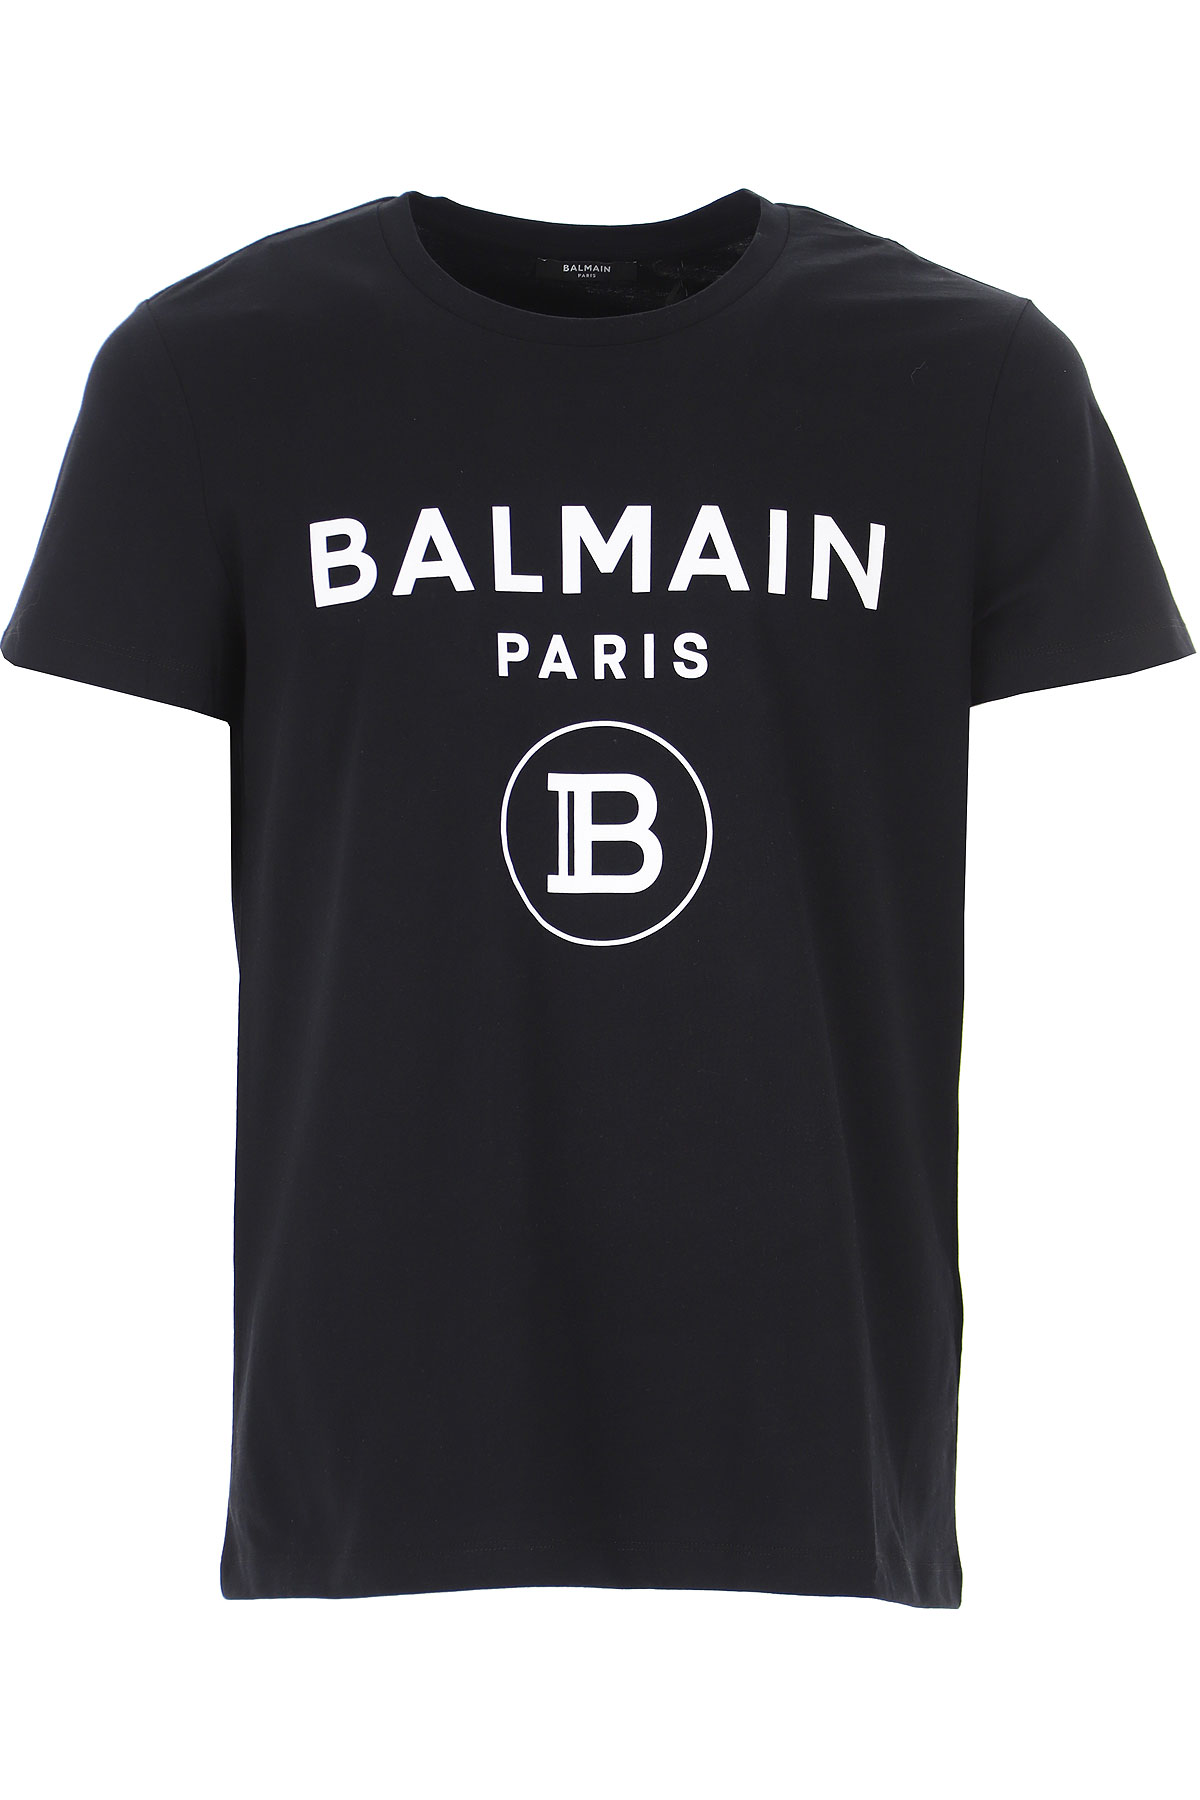 Get the Balmain T-Shirt for Men On Sale, Black, Cotton, 2019, M XS from  Raffaello Network now | AccuWeather Shop